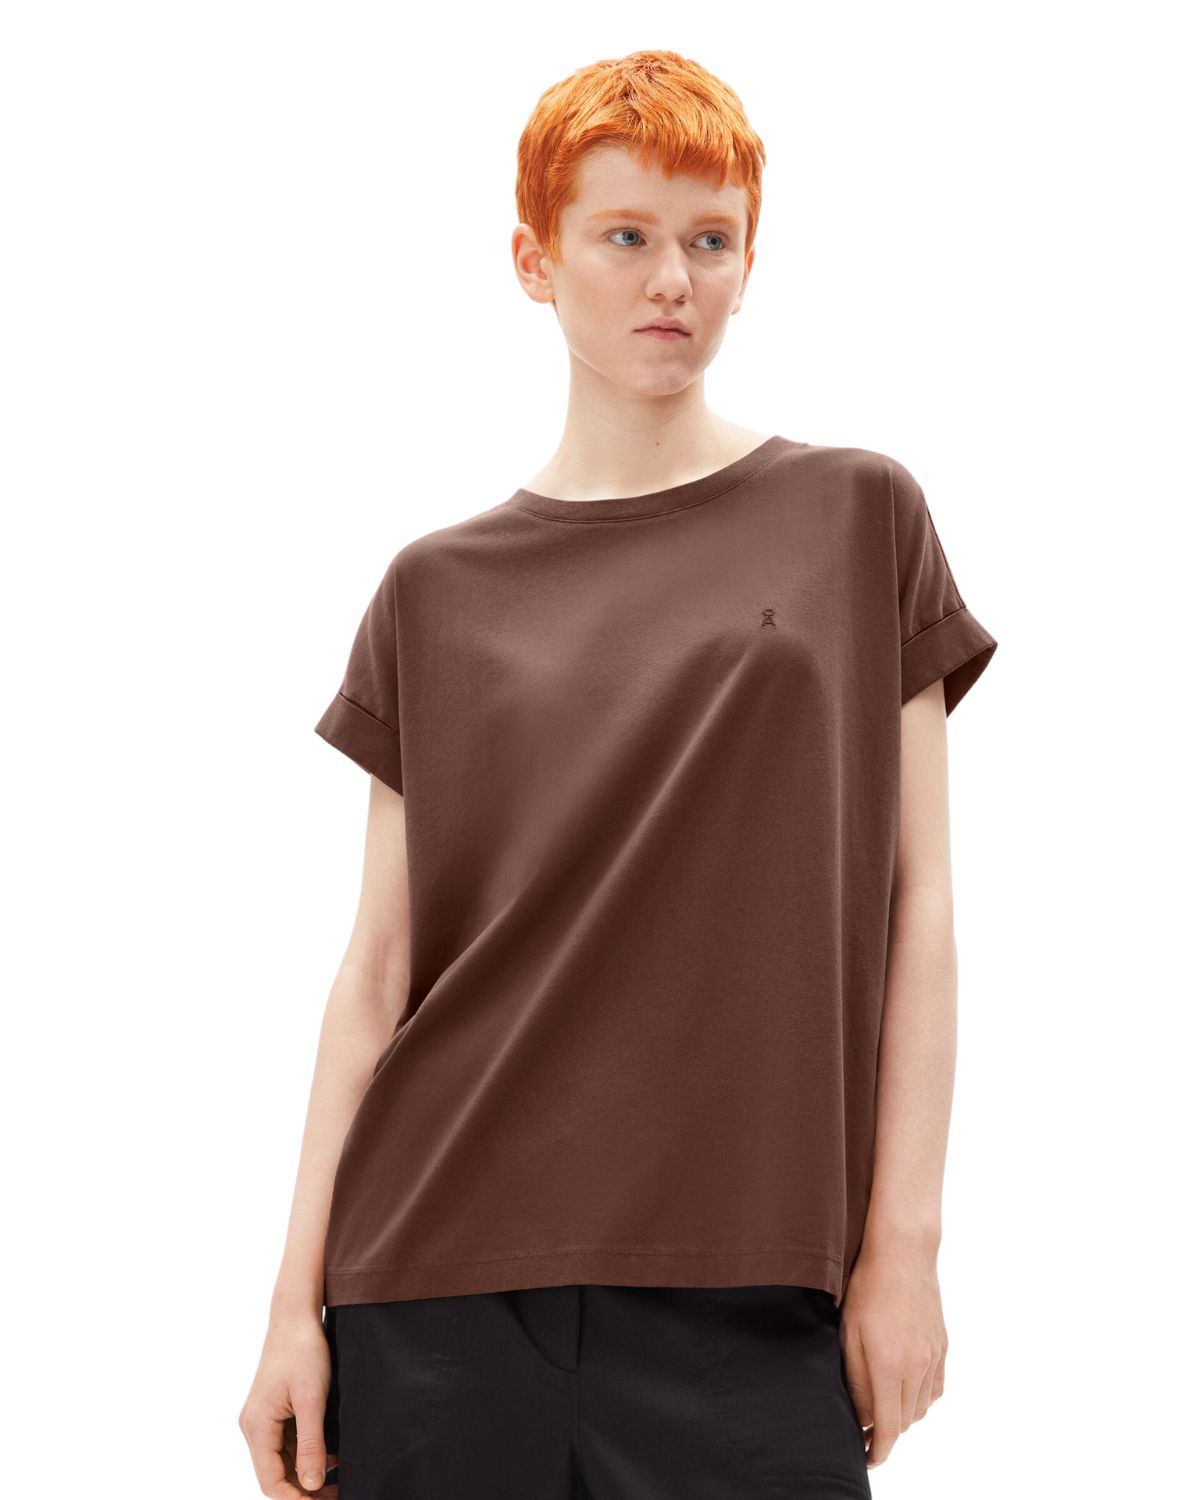 Idaara deep brown - T-Shirt Damen